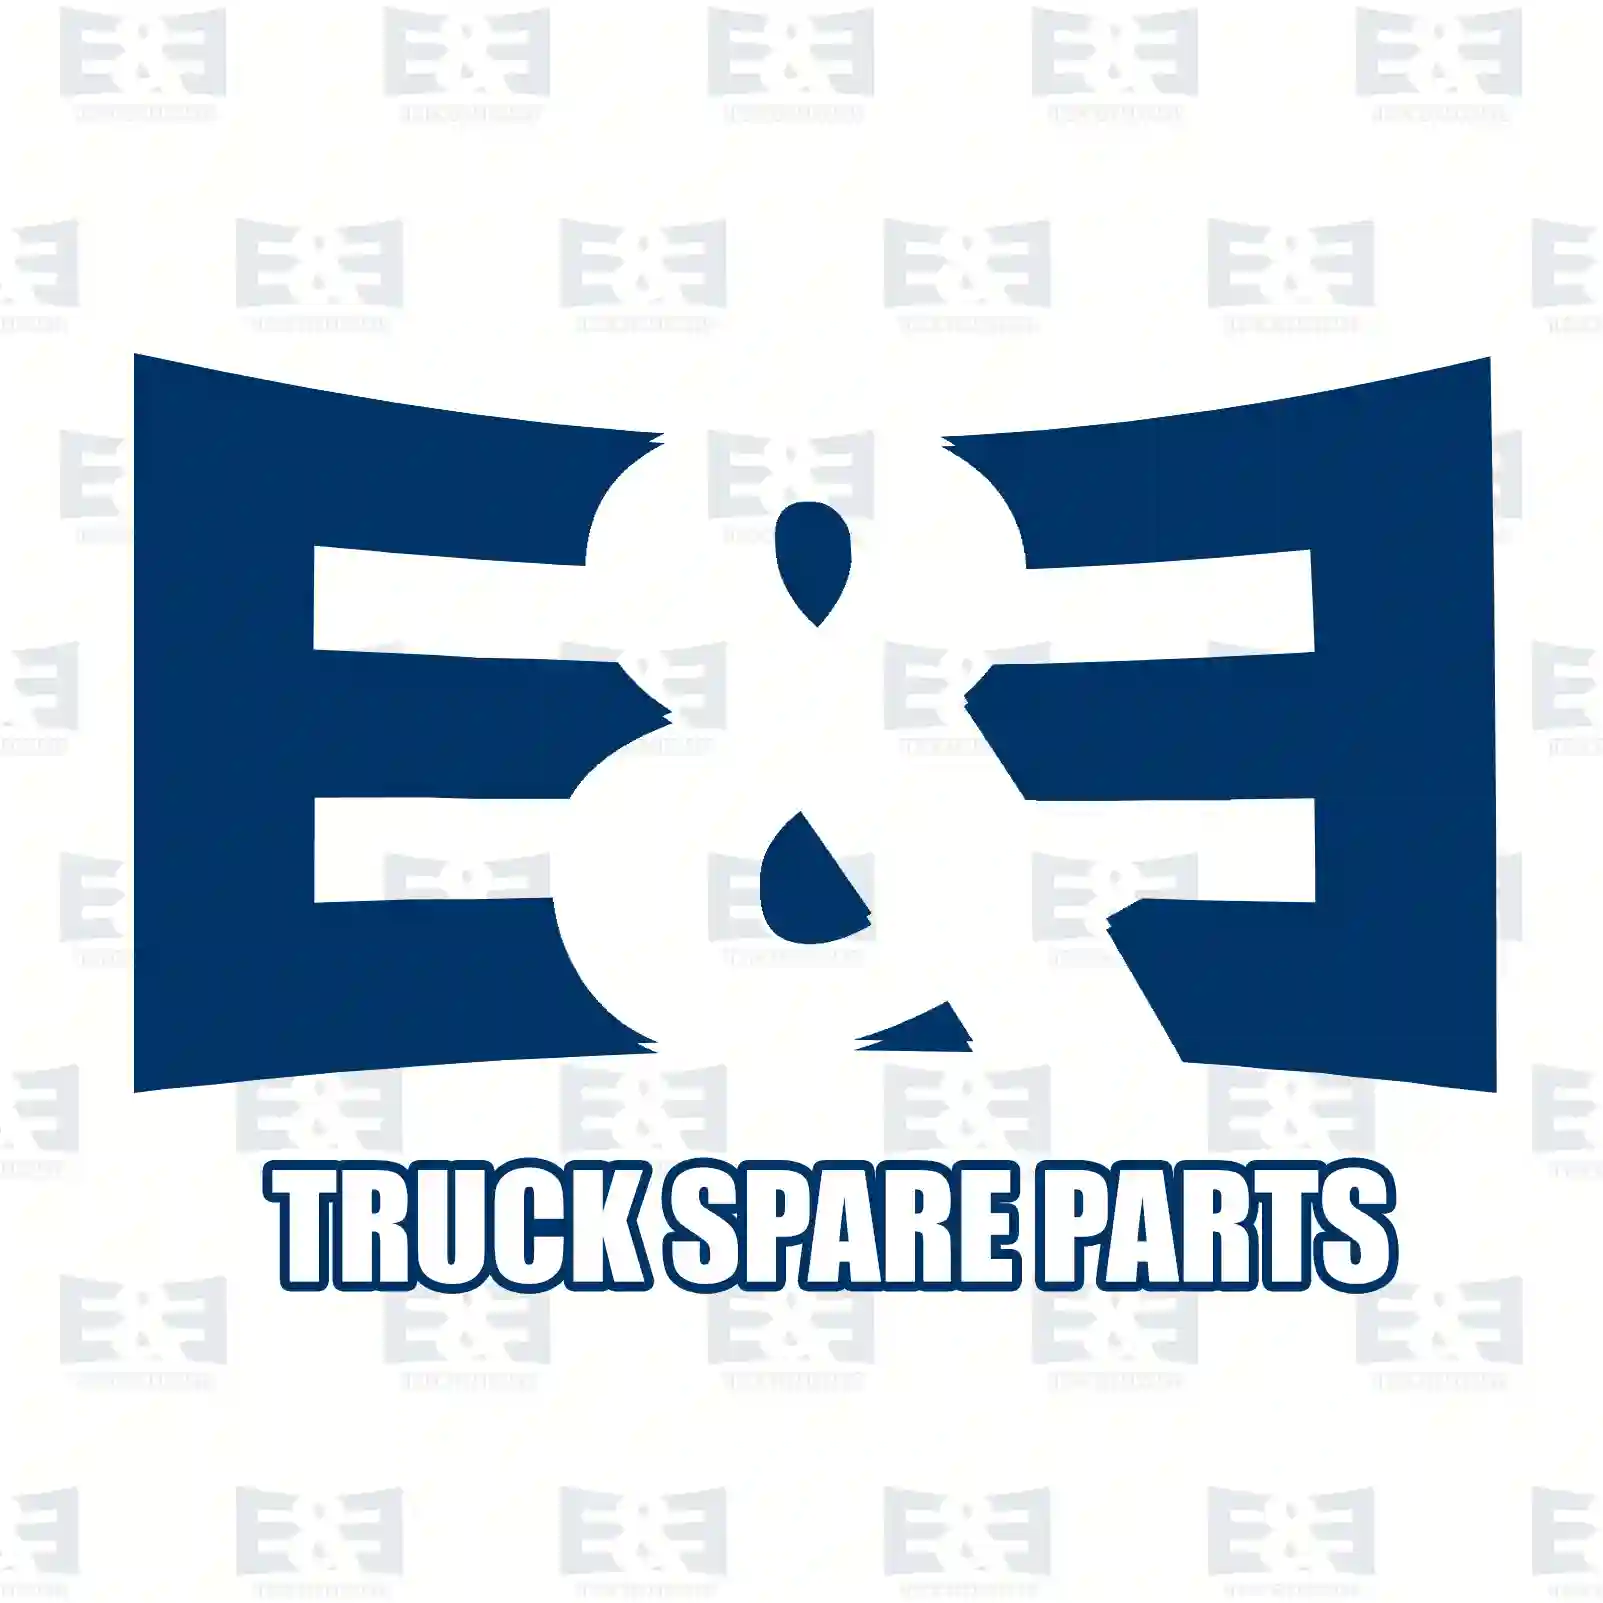 Input shaft, 2E2279281, 7422358444, 22358 ||  2E2279281 E&E Truck Spare Parts | Truck Spare Parts, Auotomotive Spare Parts Input shaft, 2E2279281, 7422358444, 22358 ||  2E2279281 E&E Truck Spare Parts | Truck Spare Parts, Auotomotive Spare Parts